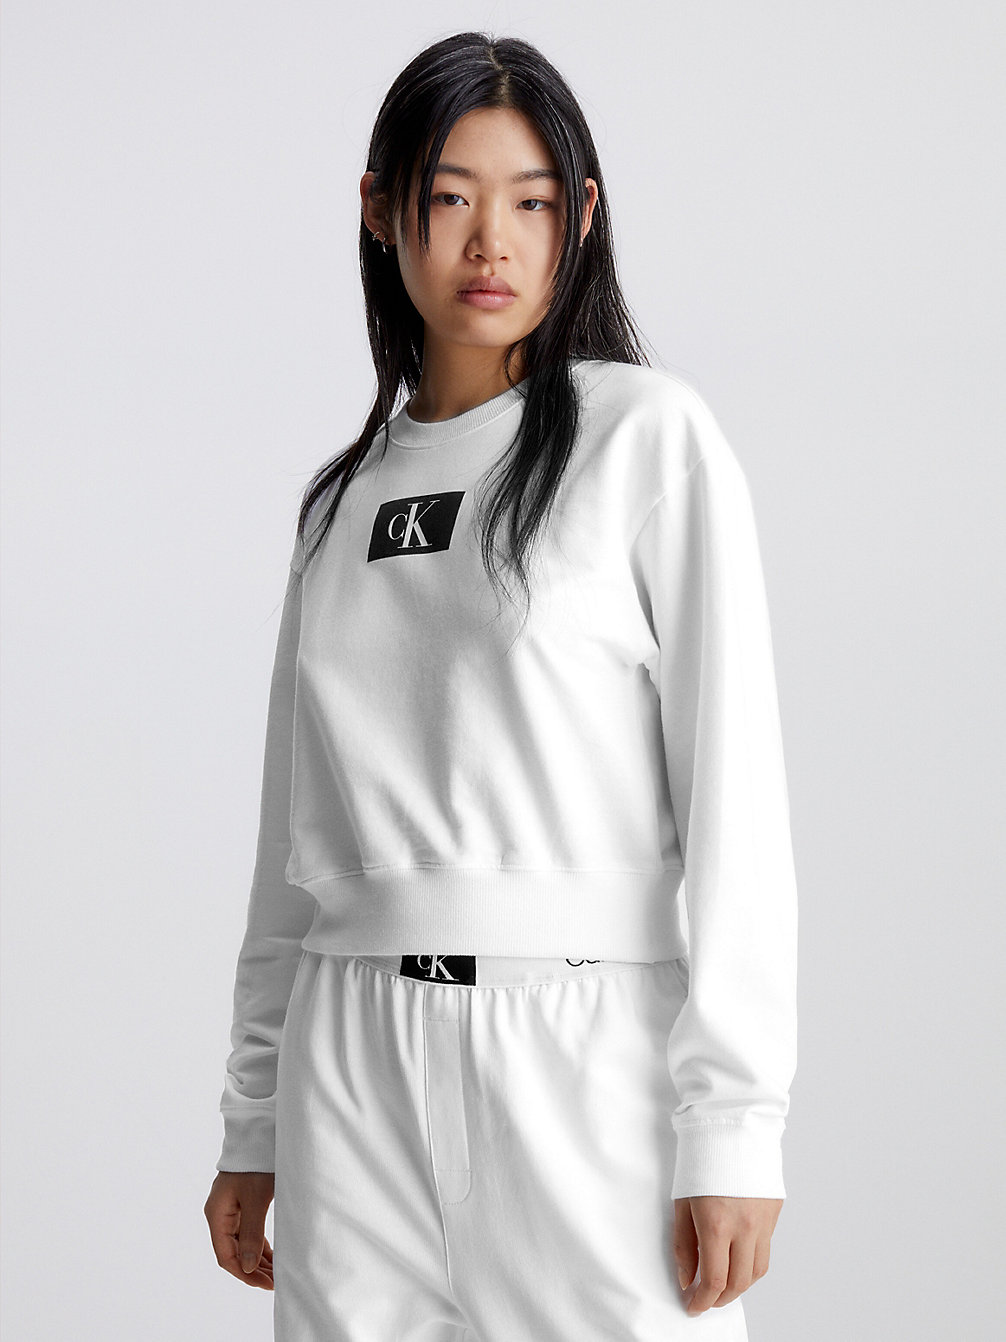 WHITE > Bluza Po Domu - Ck96 > undefined Kobiety - Calvin Klein